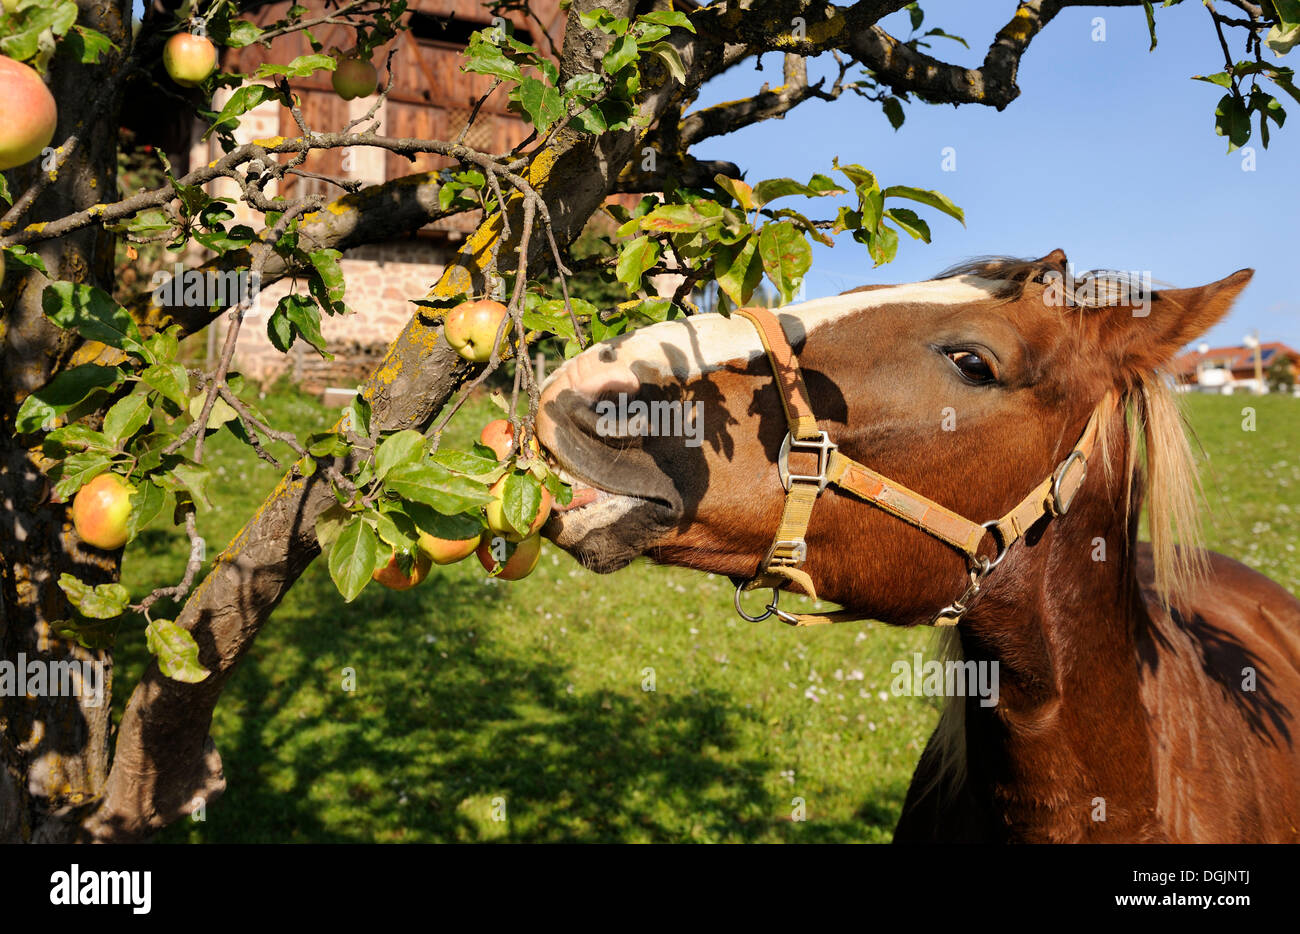 El caballo come manzana fotografías e imágenes de alta resolución - Alamy